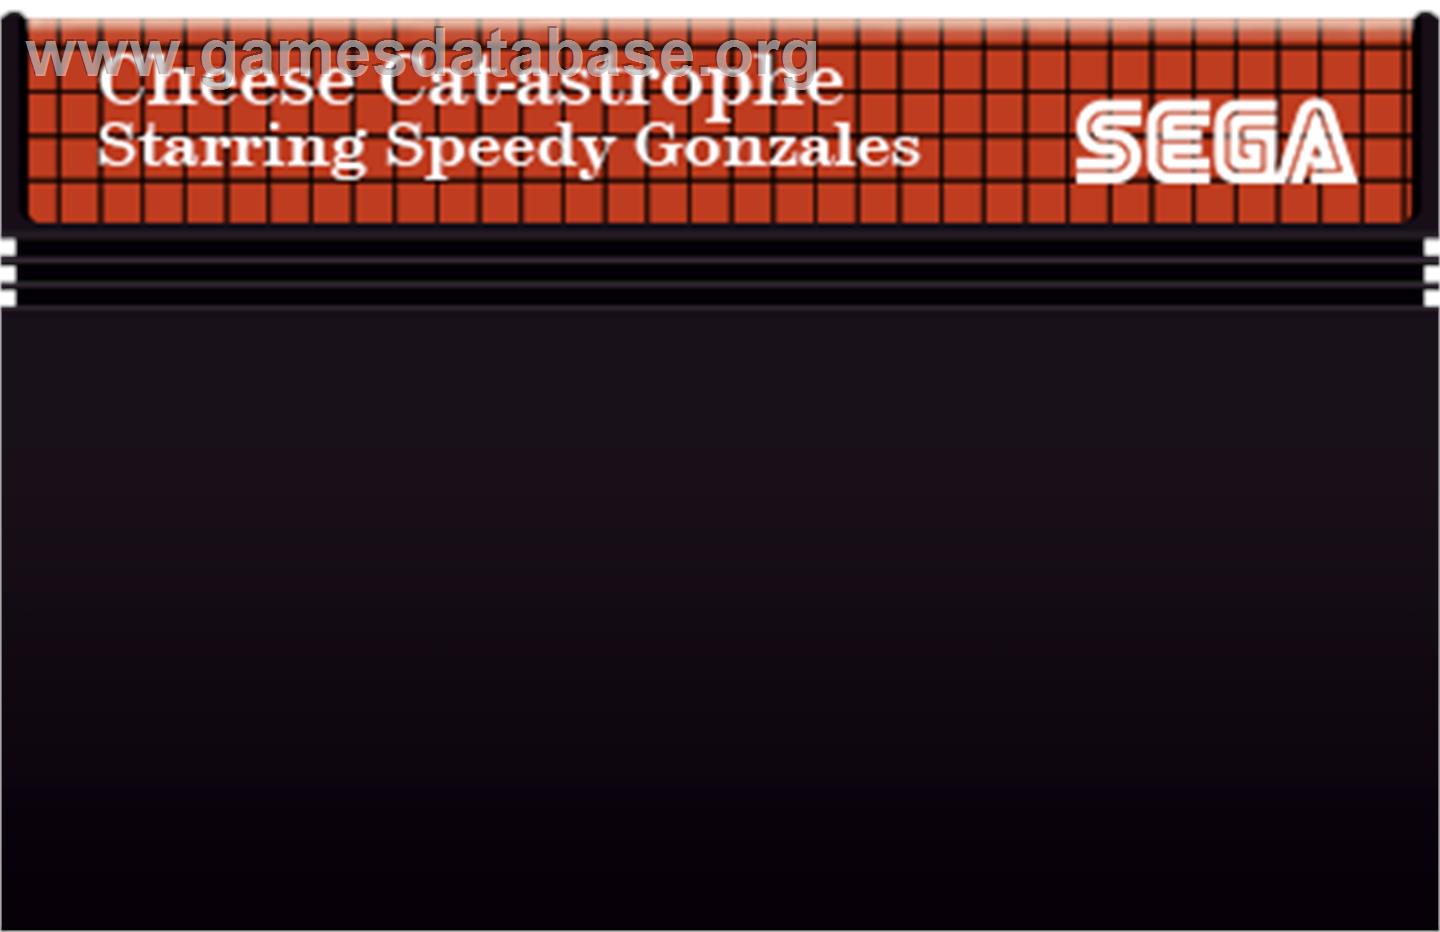 Cheese Cat-Astrophe starring Speedy Gonzales - Sega Master System - Artwork - Cartridge